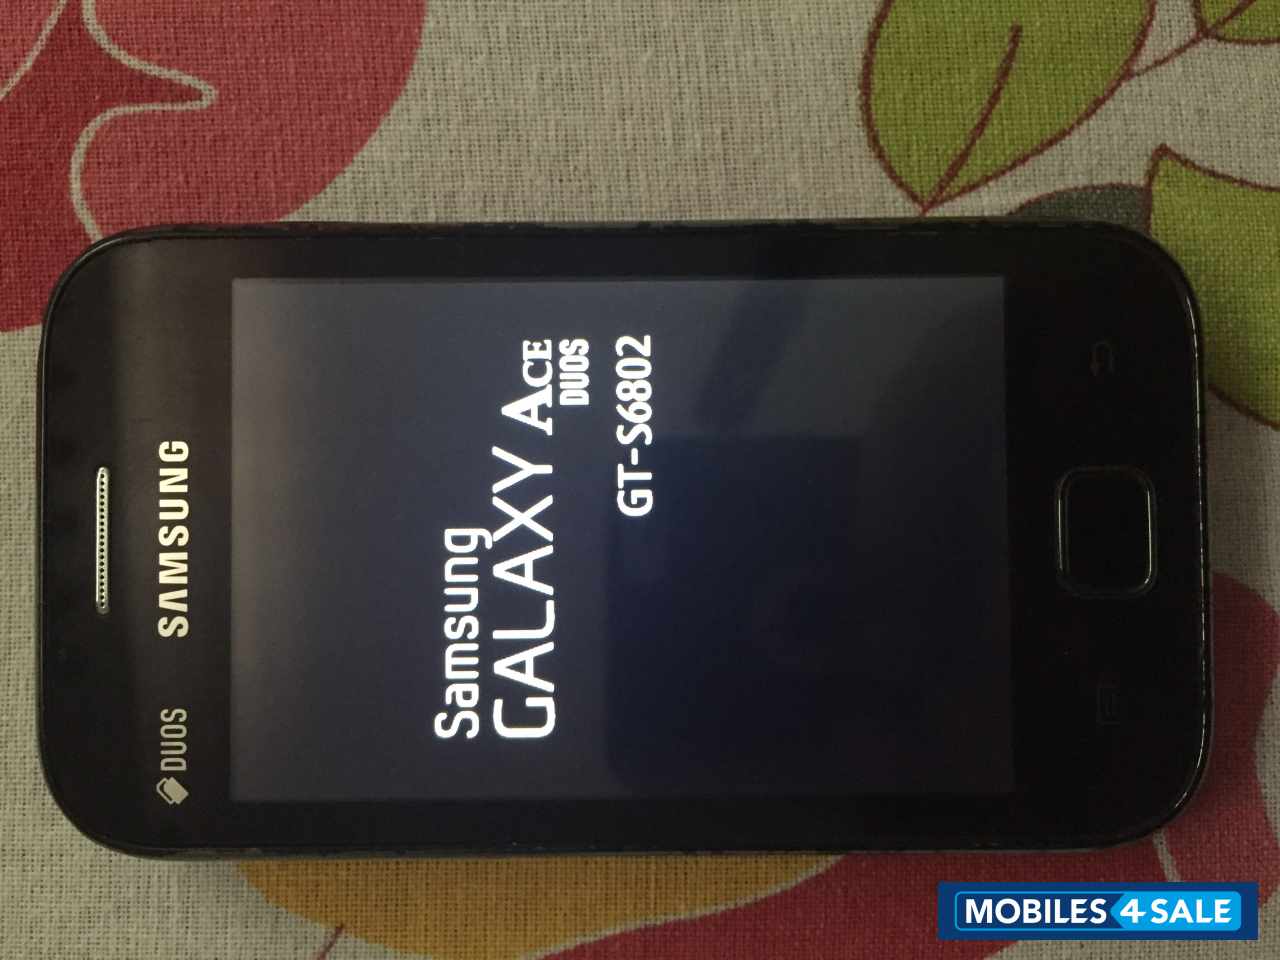 Black Samsung GT-series S6802